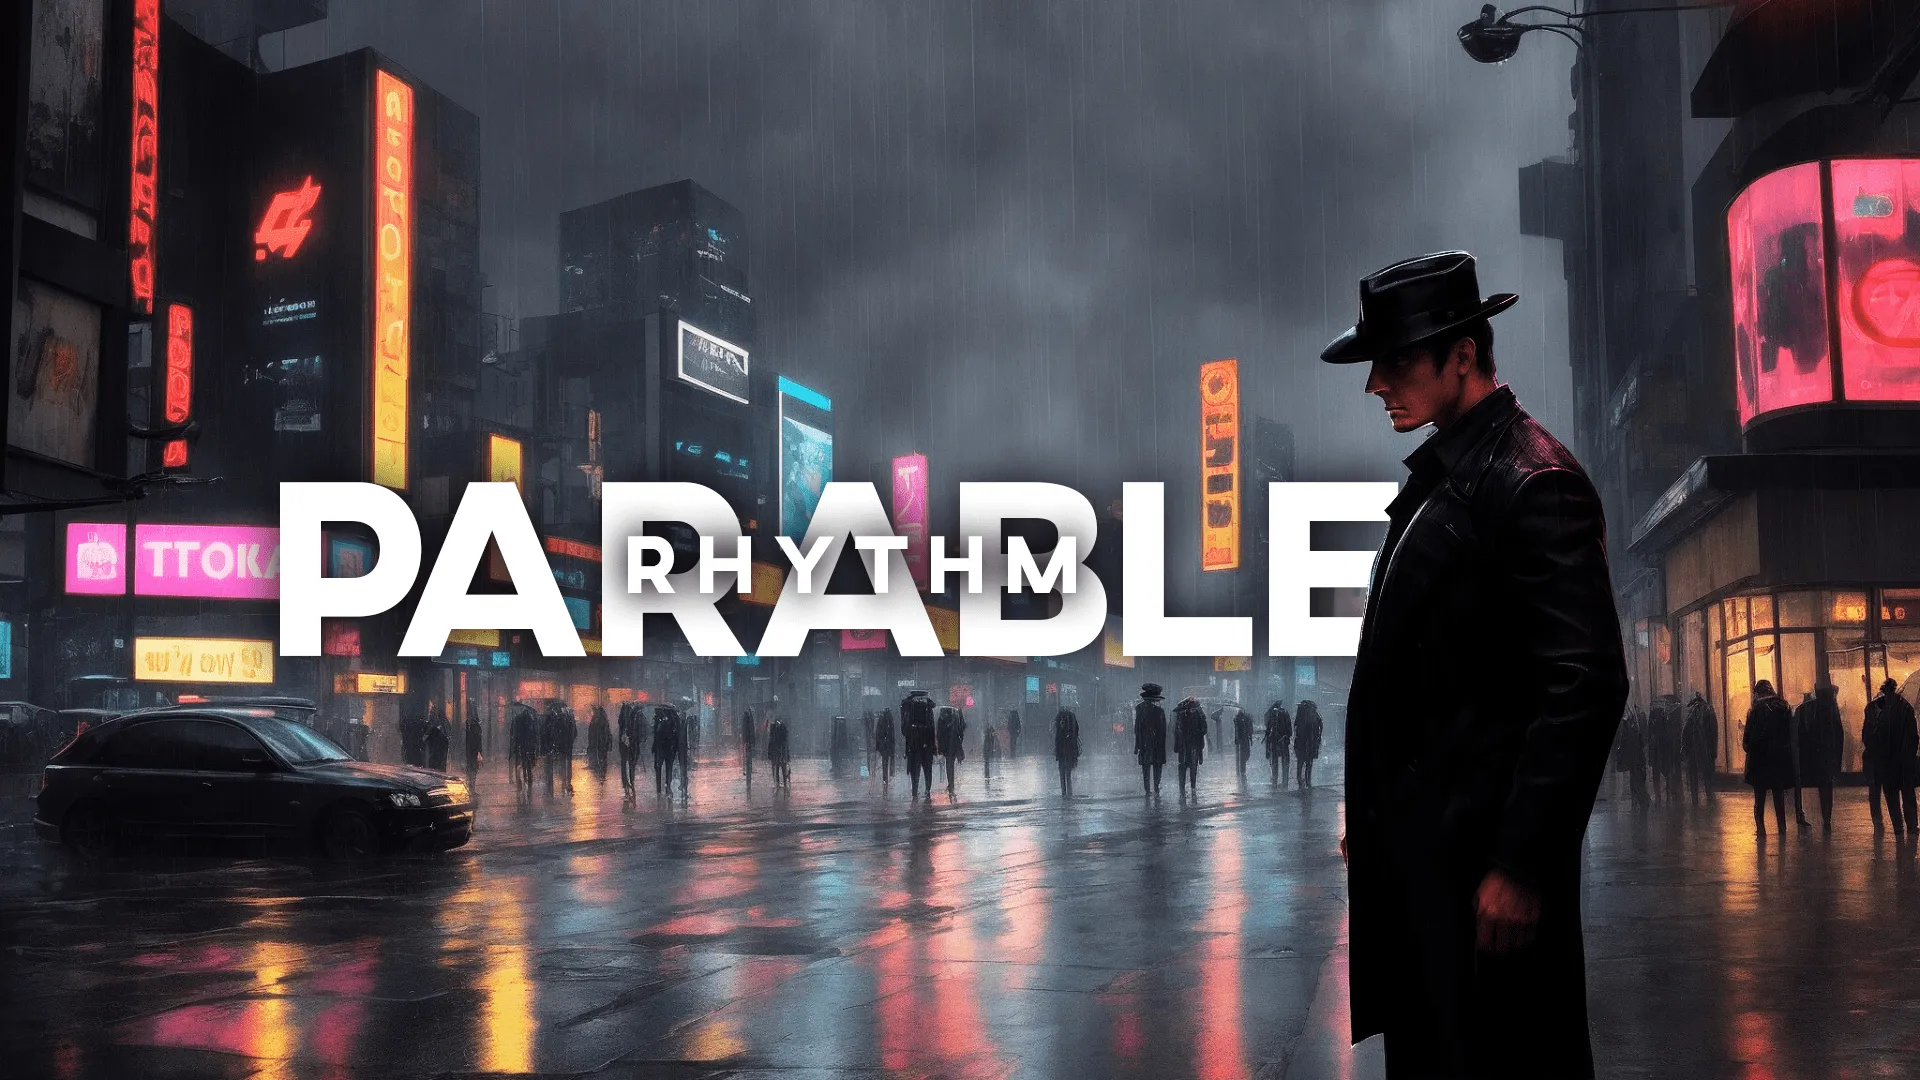 Parable Rhythm - An Unpredictable Crime Thriller